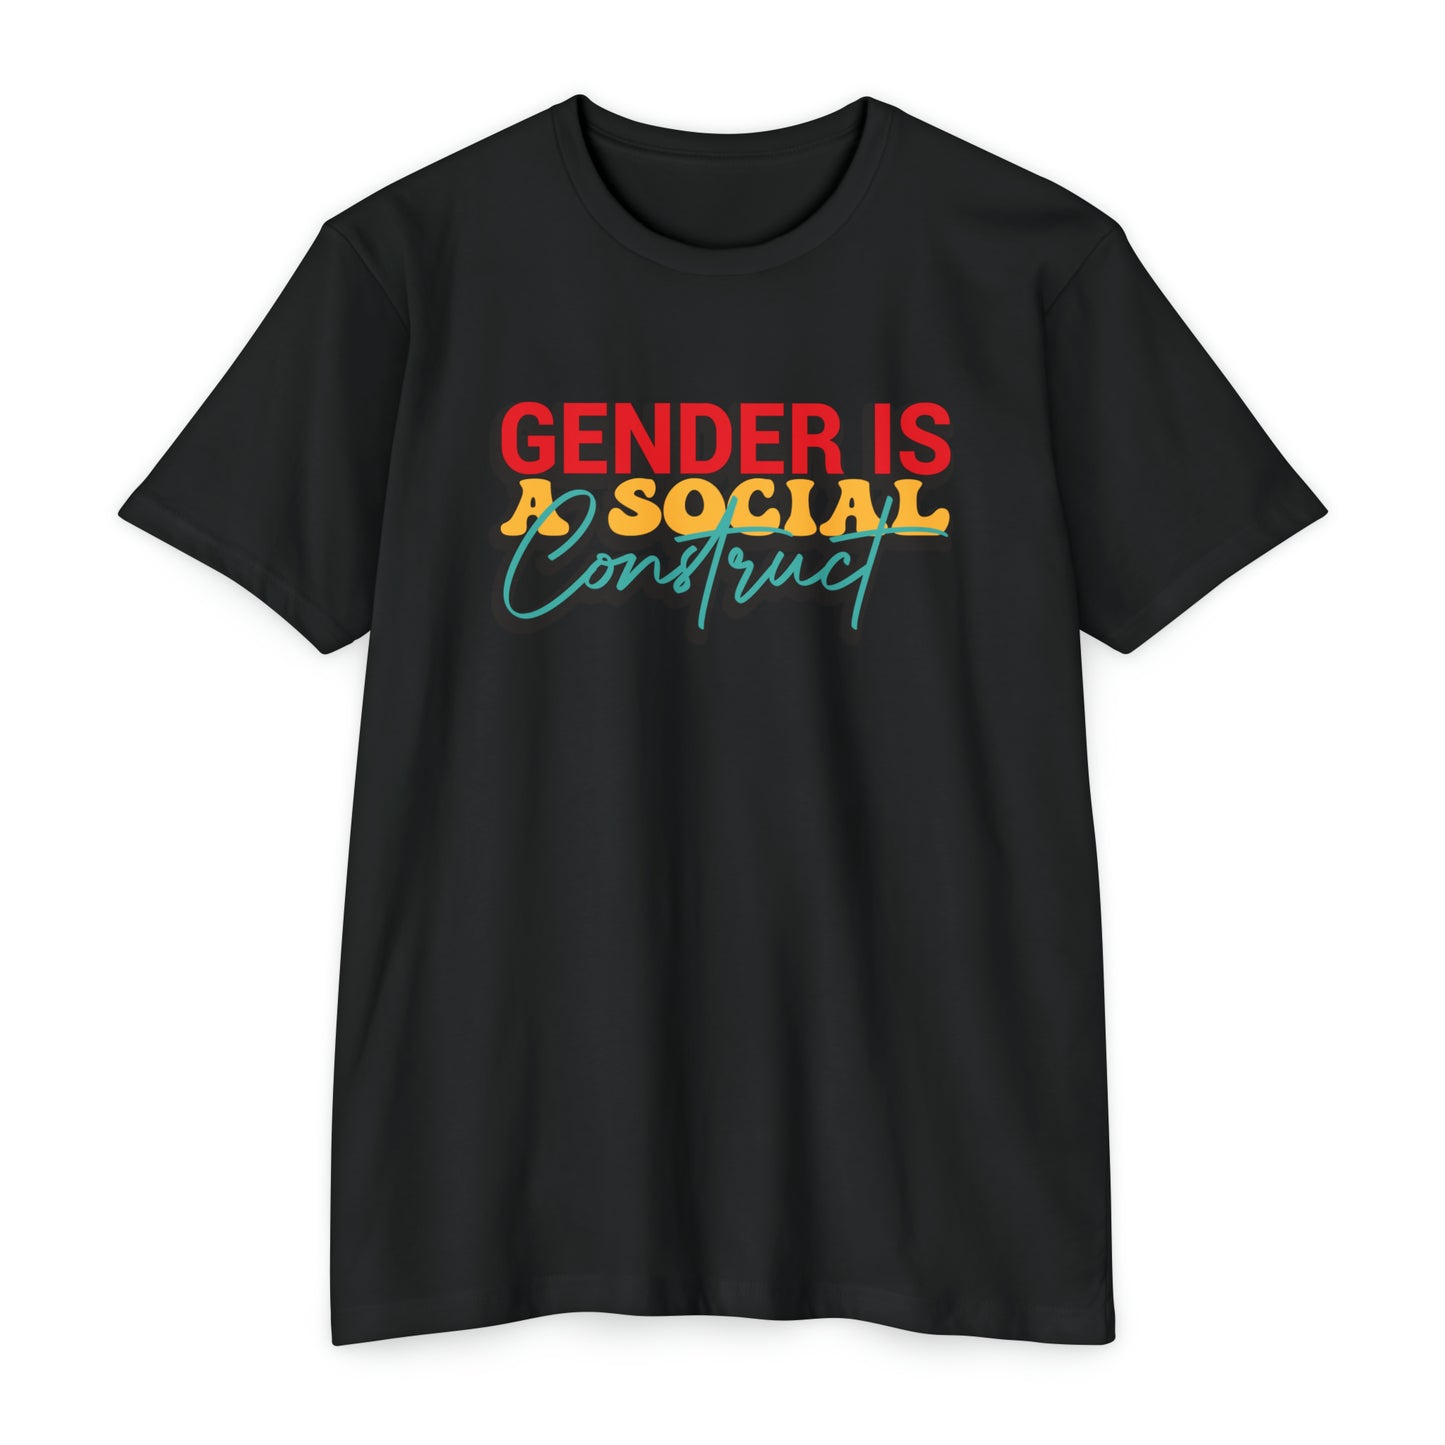 Gender is a Social Construct Shirt